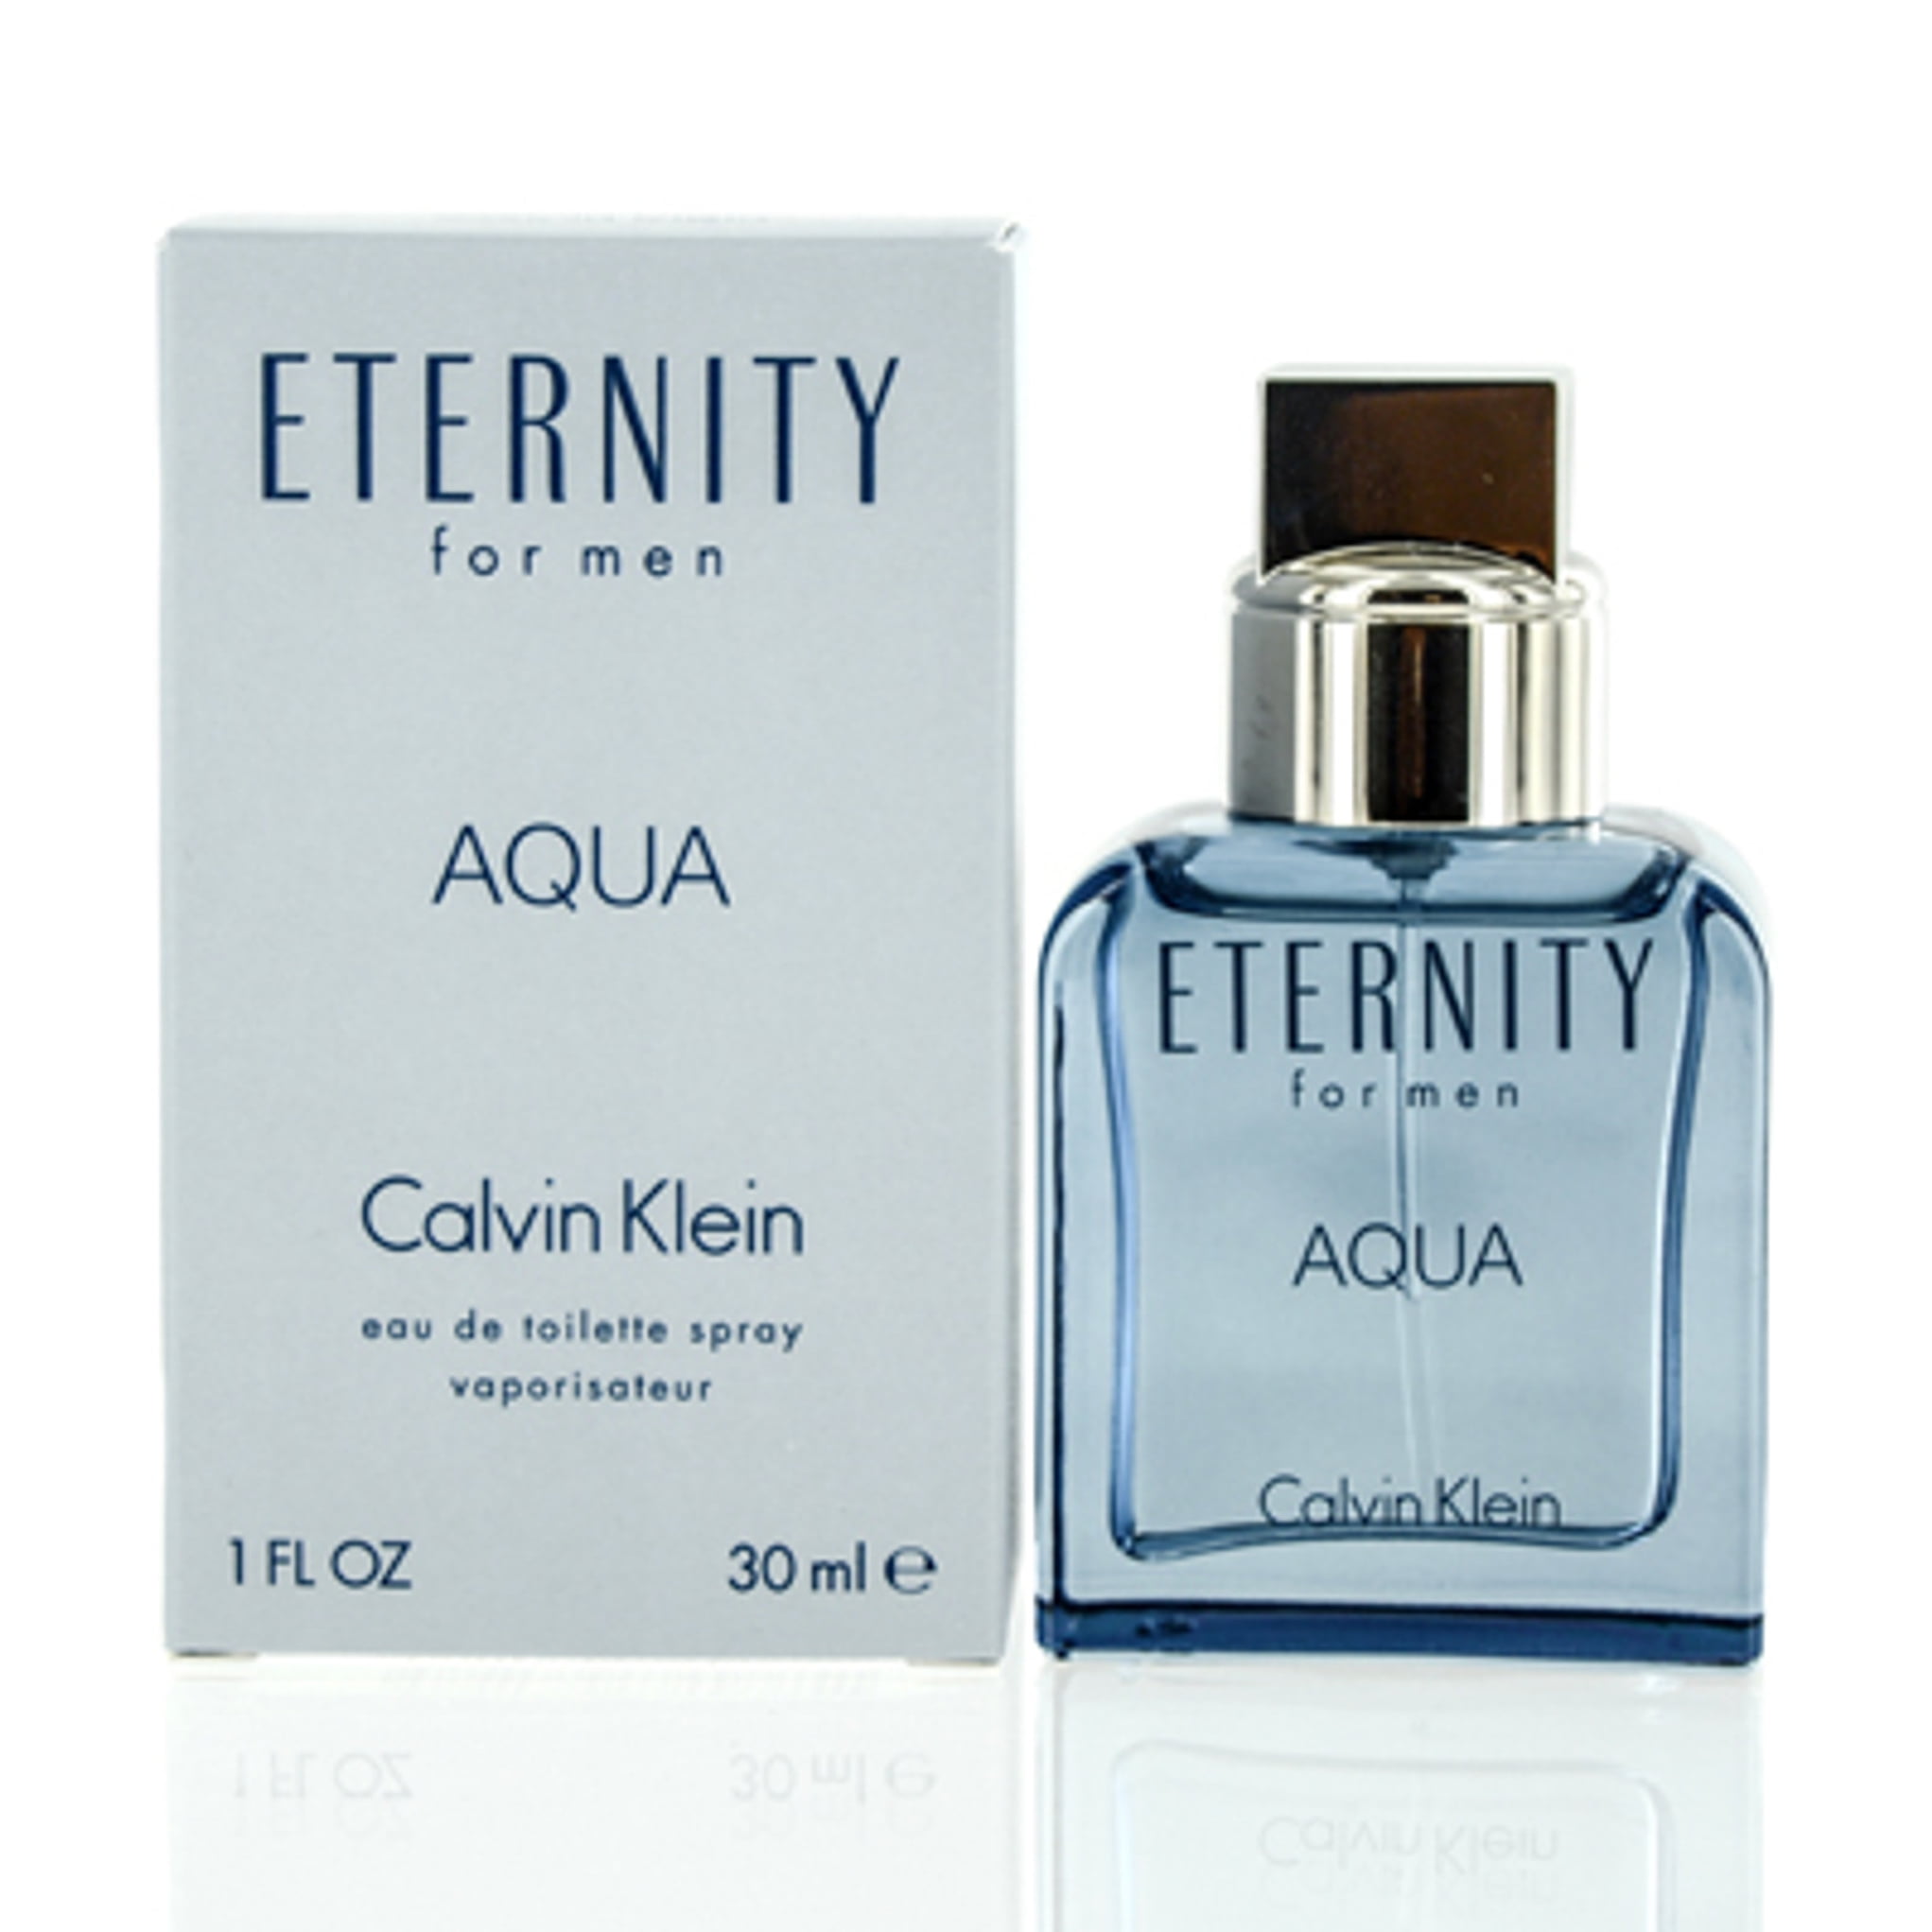 Eternity Spray Eau Toilette De Aqua oz 1.0 Men